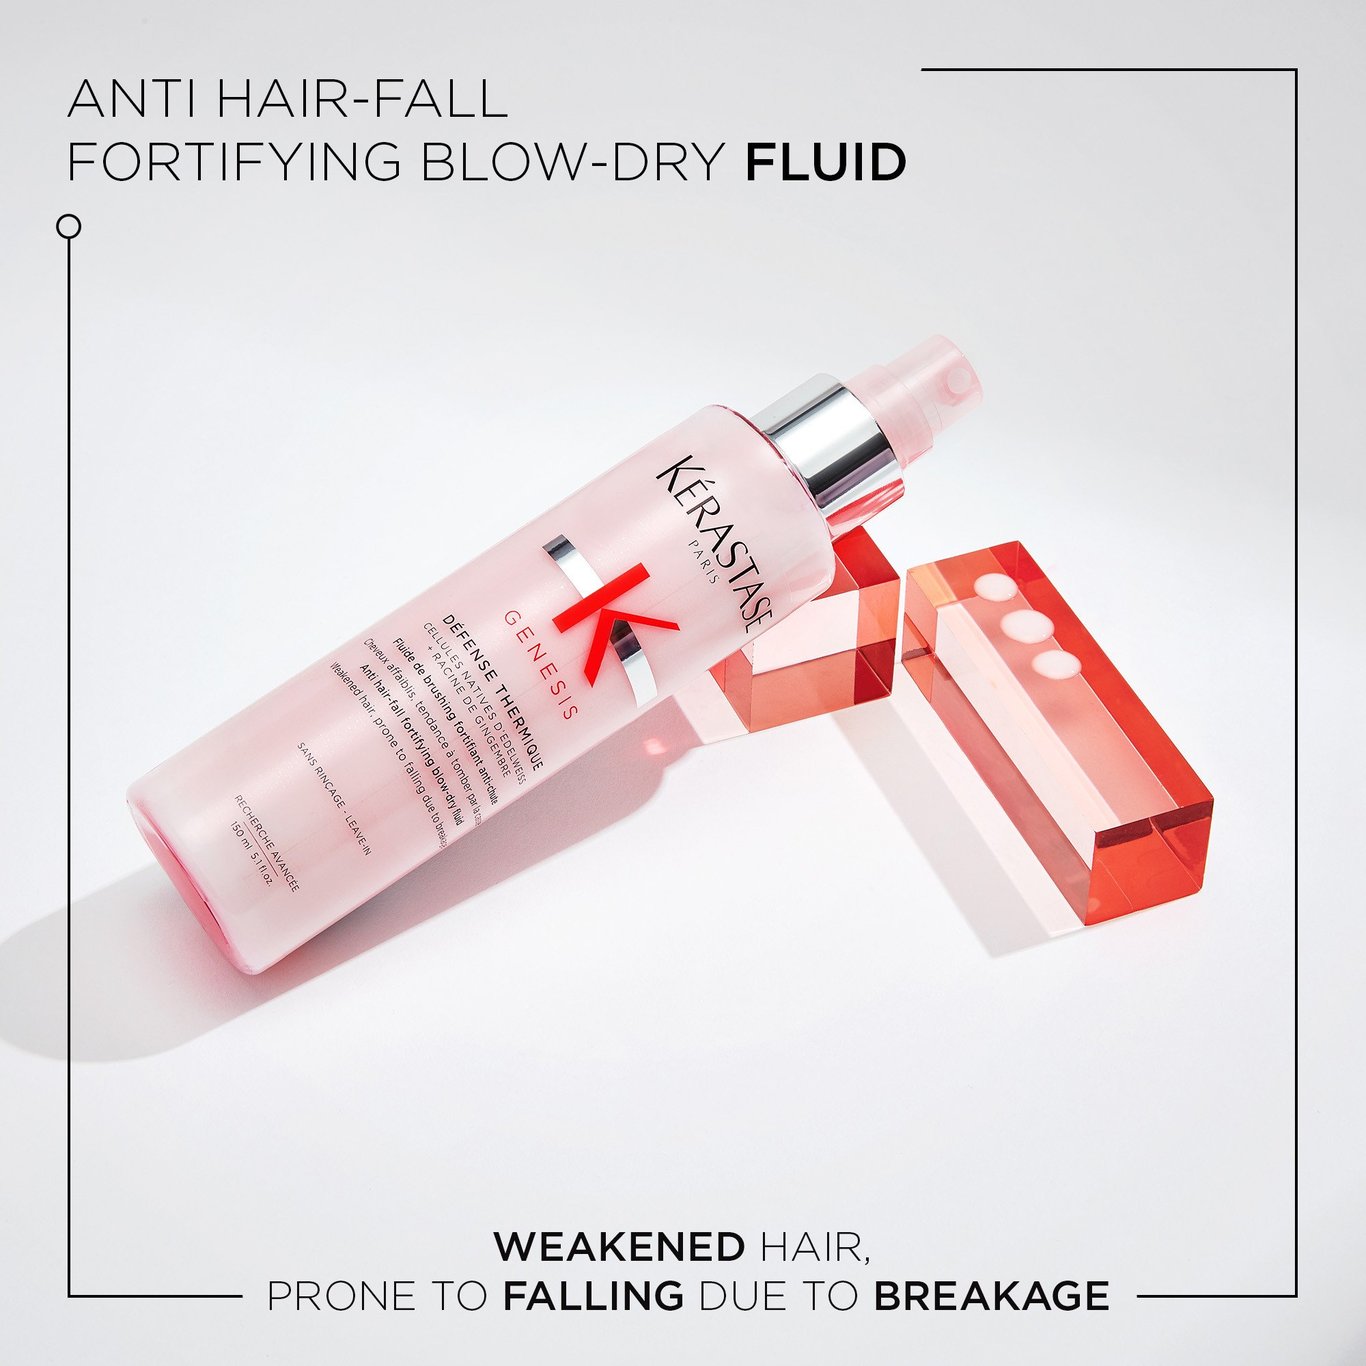 Anti hair-fall fortifying blow-dry fluid. Weakened hair, prone to falling due to breakage